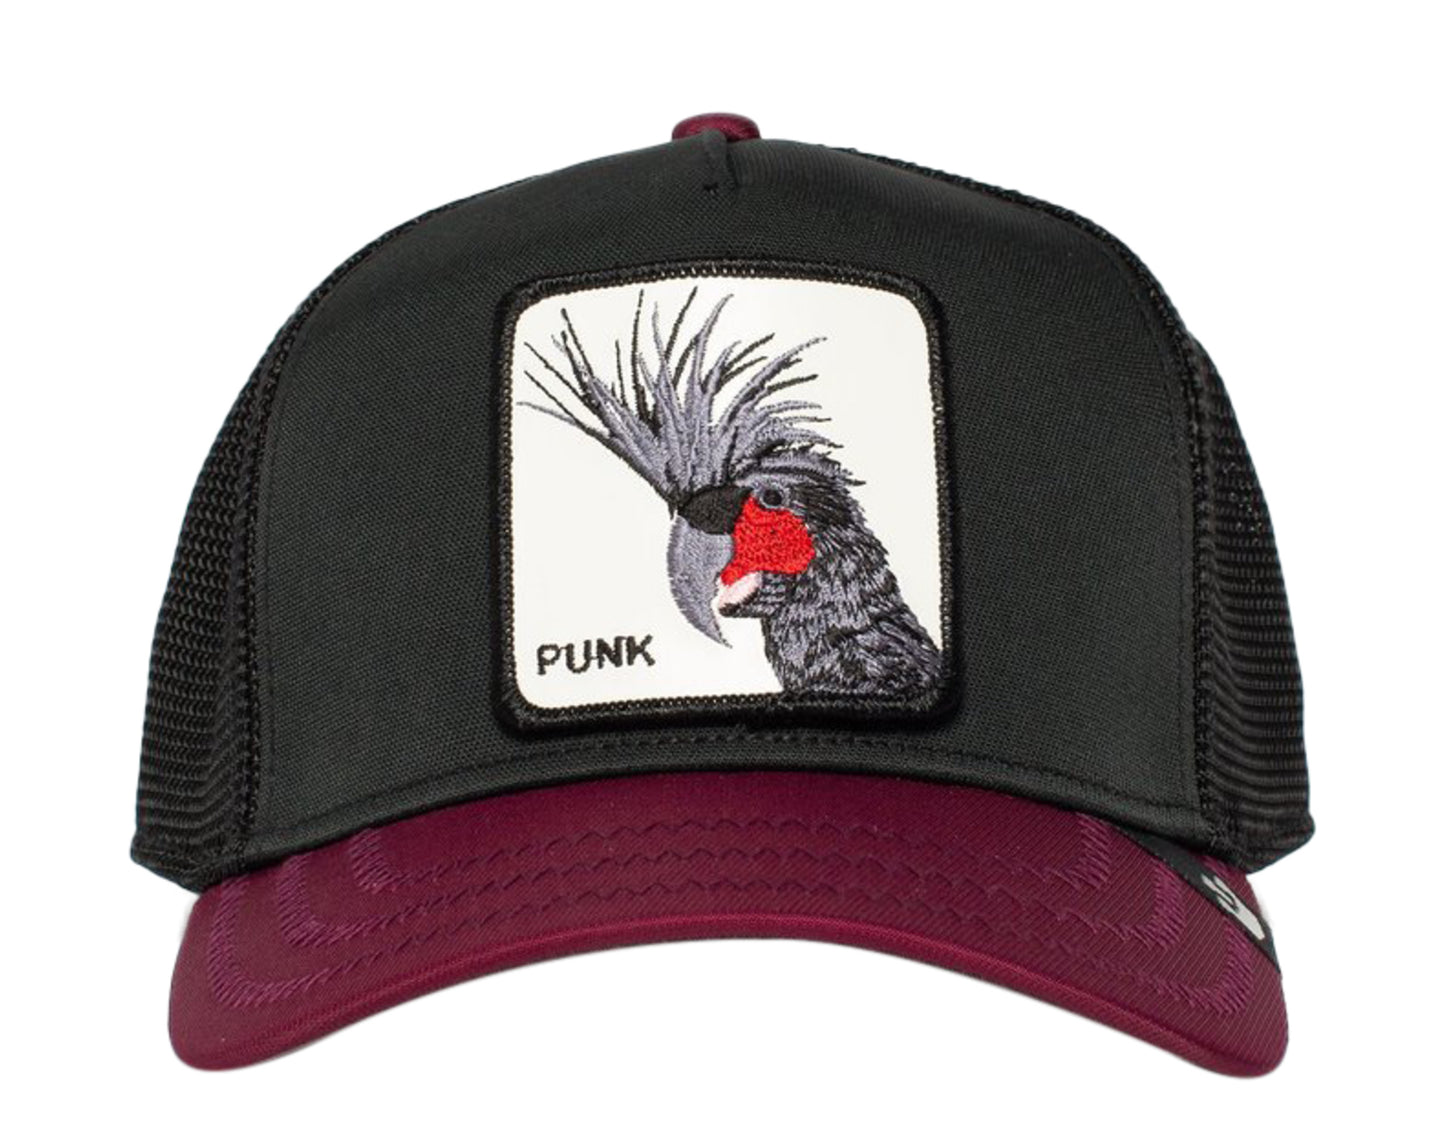 Goorin Bros - The Farm - Punk Sqwauk Black Men's Trucker Hat 101-0687-BLK